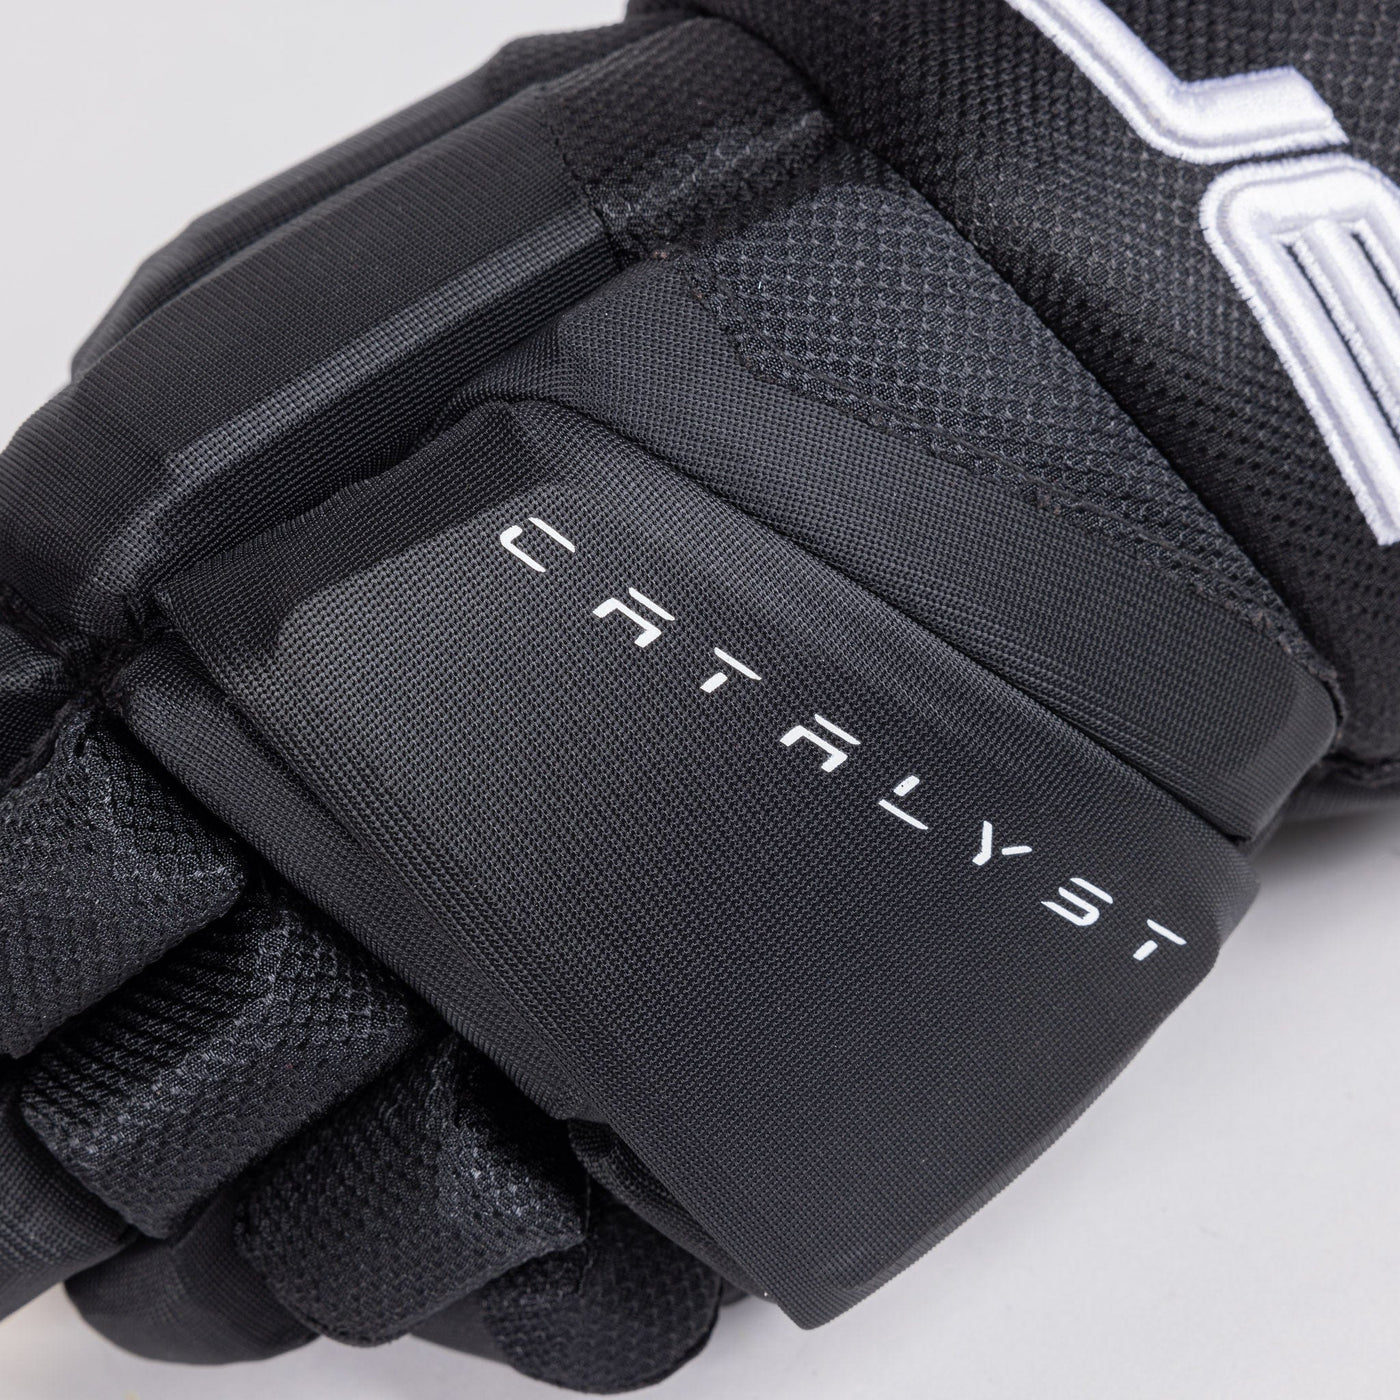 TRUE Catalyst Pro Stock Senior Hockey Glove - Minnesota - The Hockey Shop Source For Sports